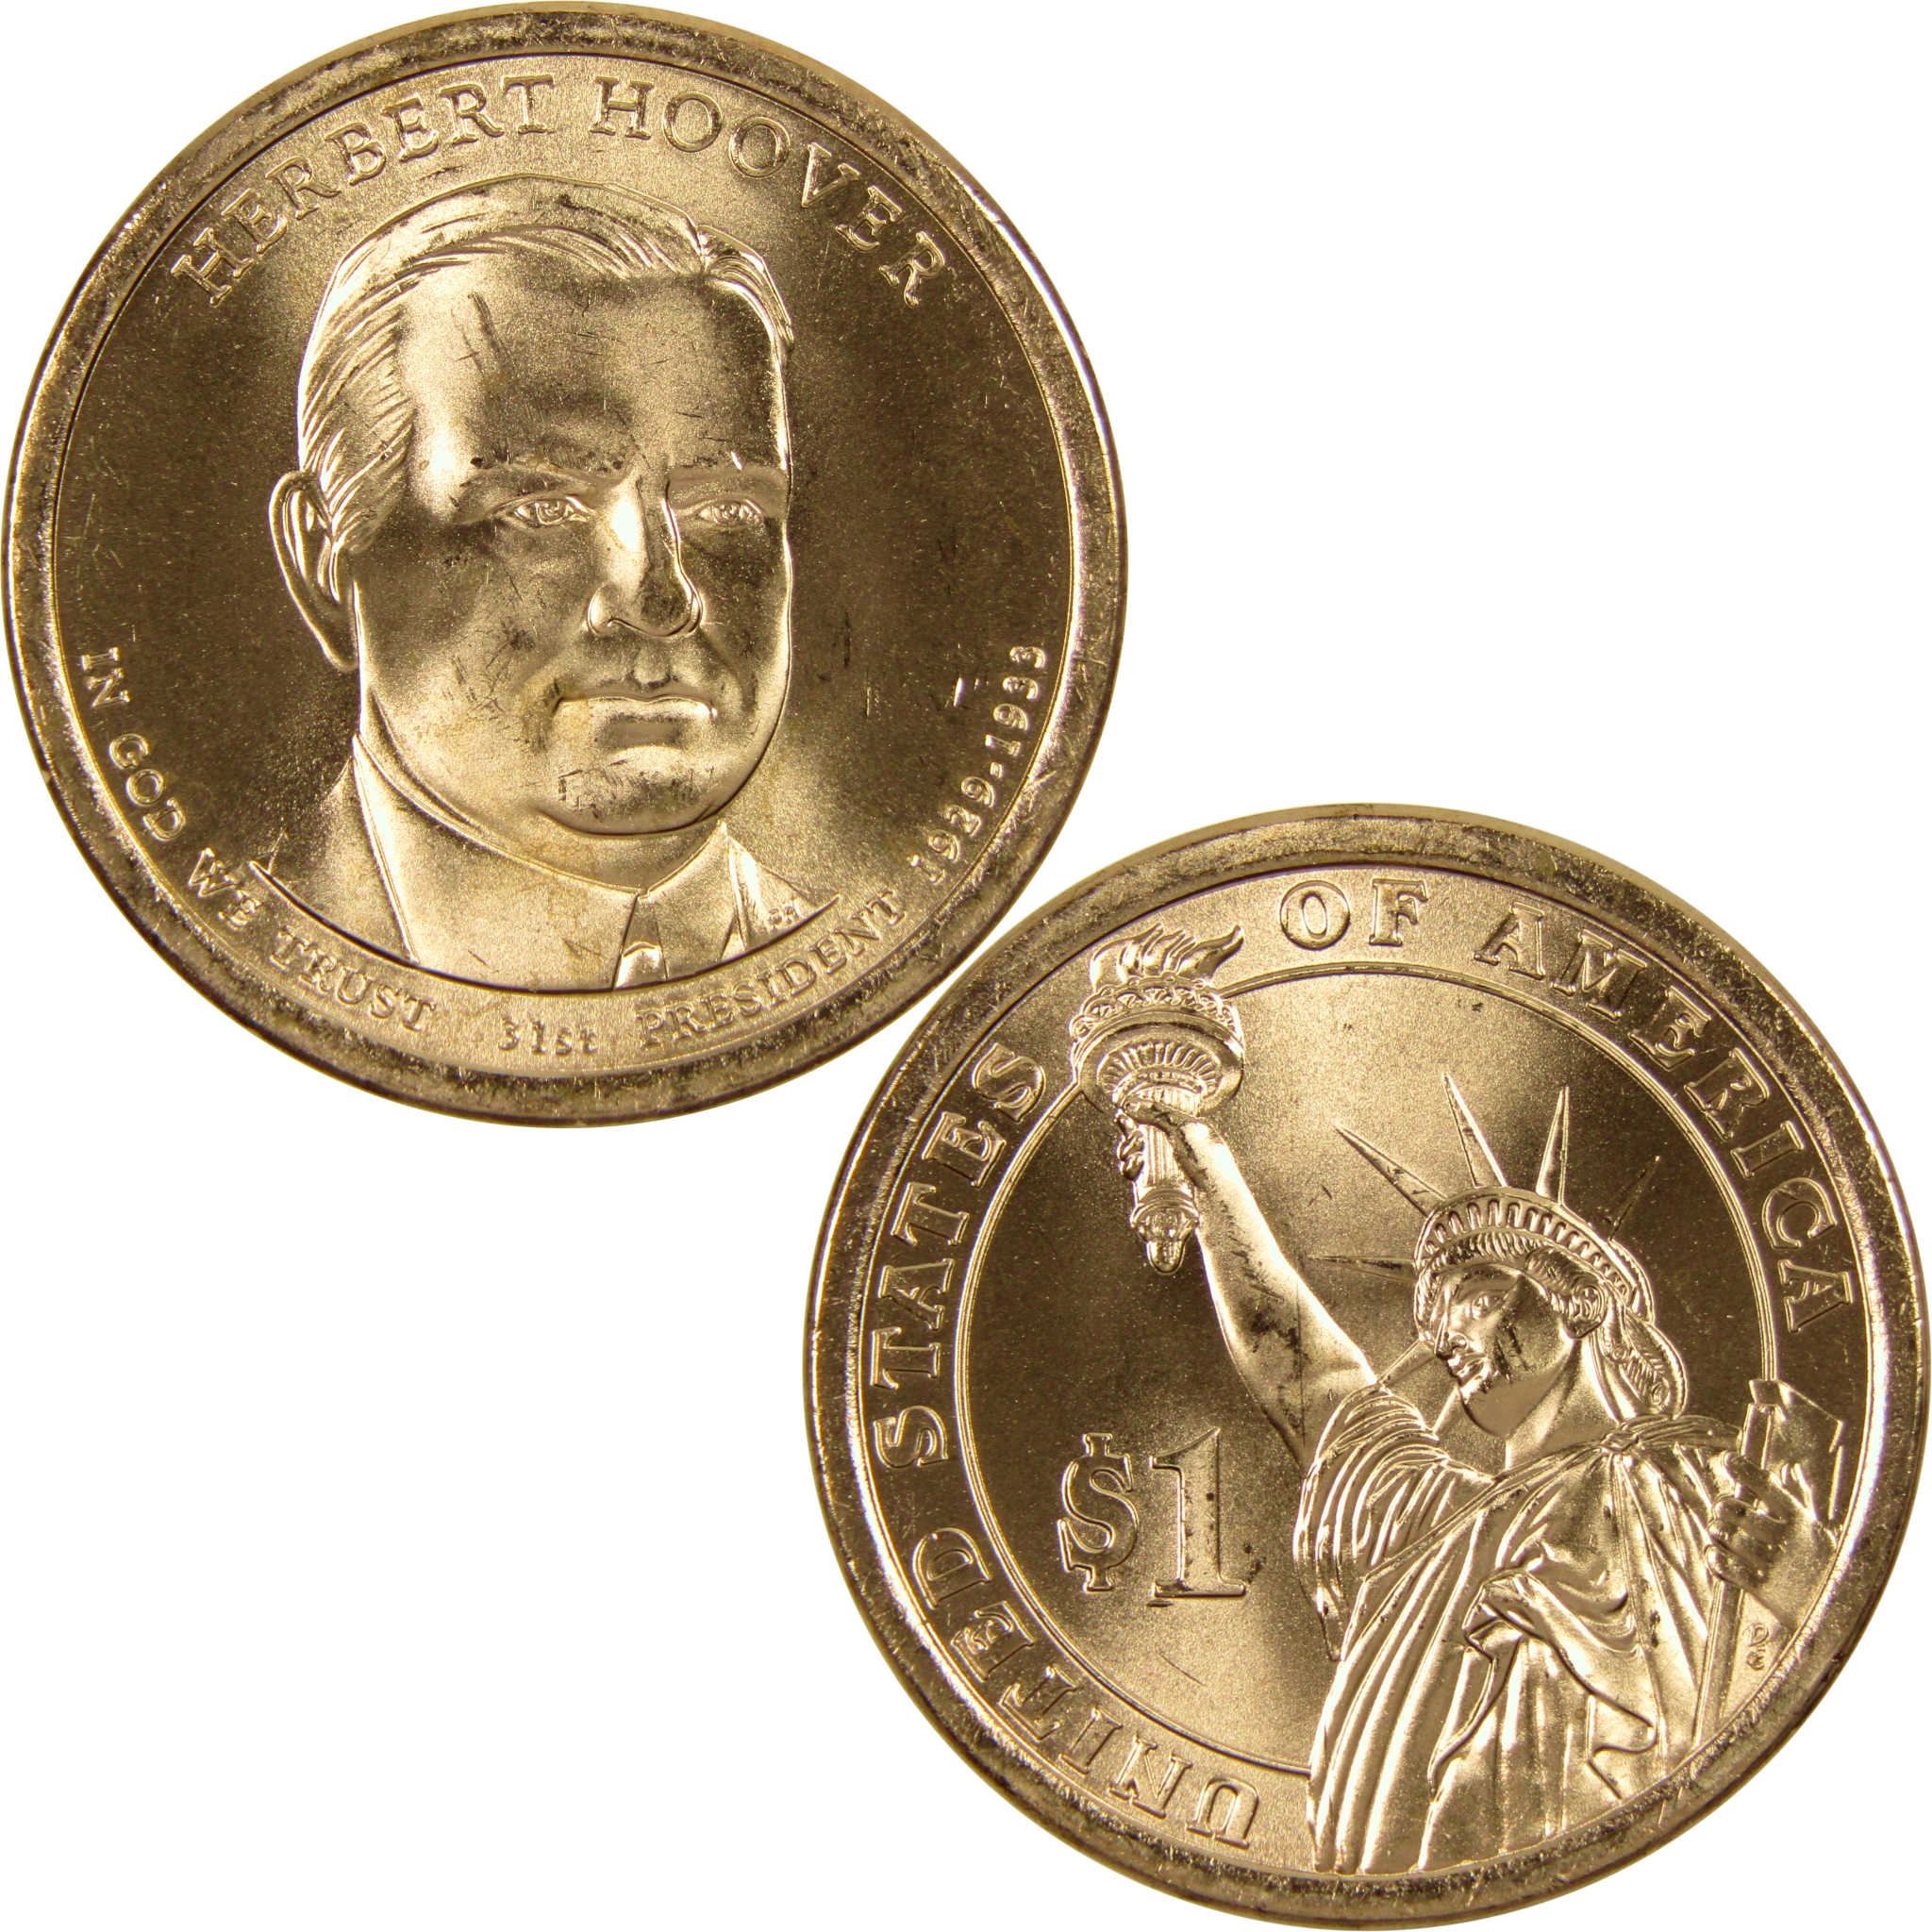 2014 D Herbert Hoover Presidential Dollar BU Uncirculated $1 Coin